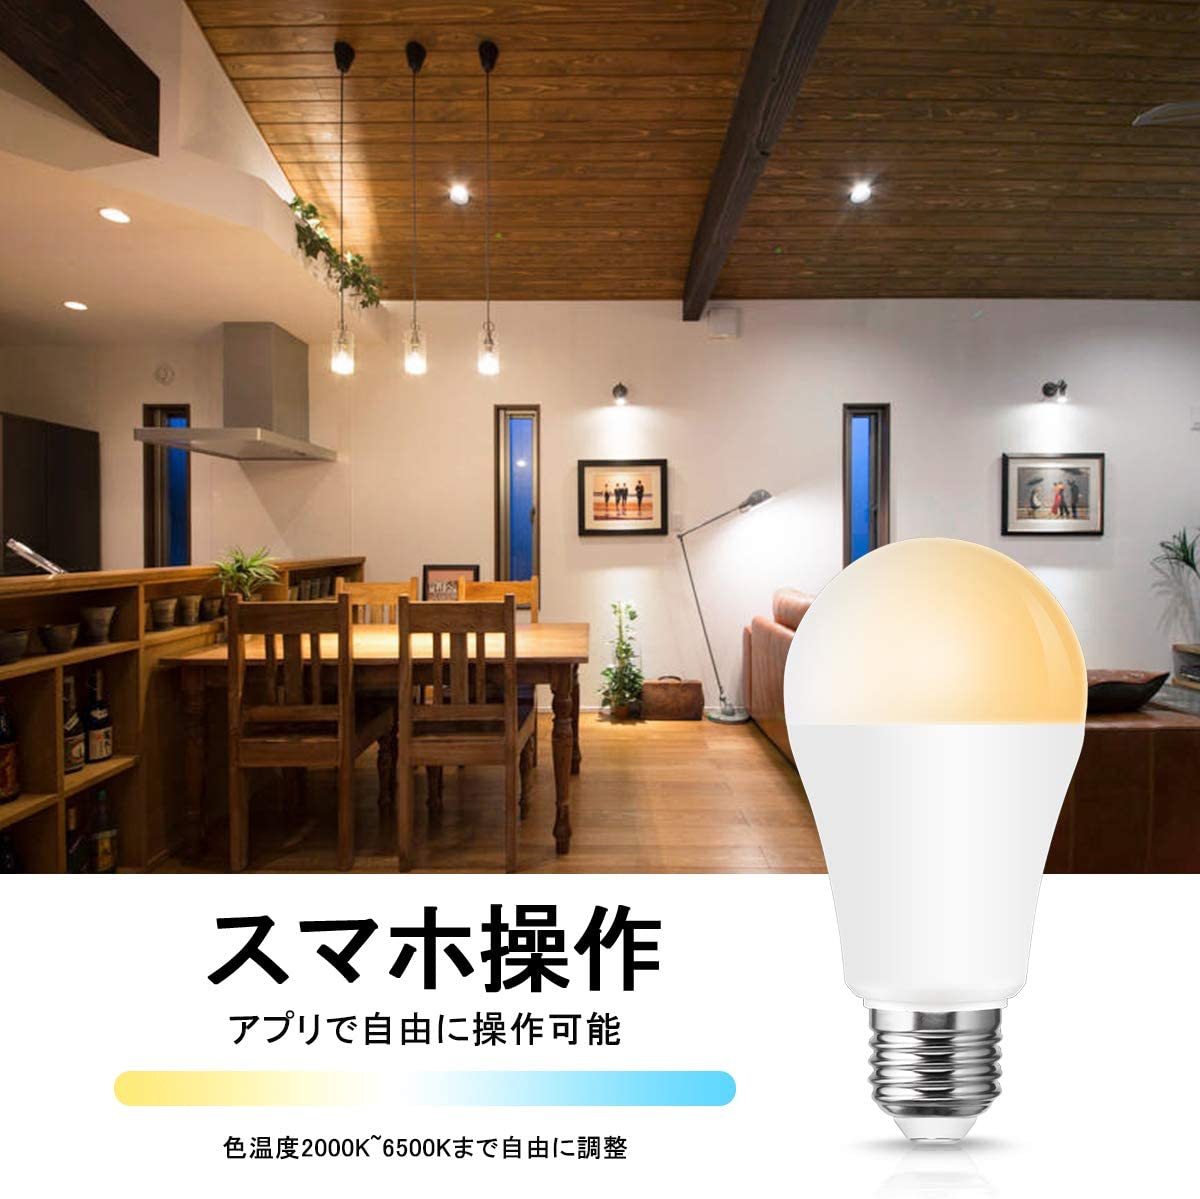 LOHAS(ロハス) WIFI スマート LED電球 E26口金の商品画像4 